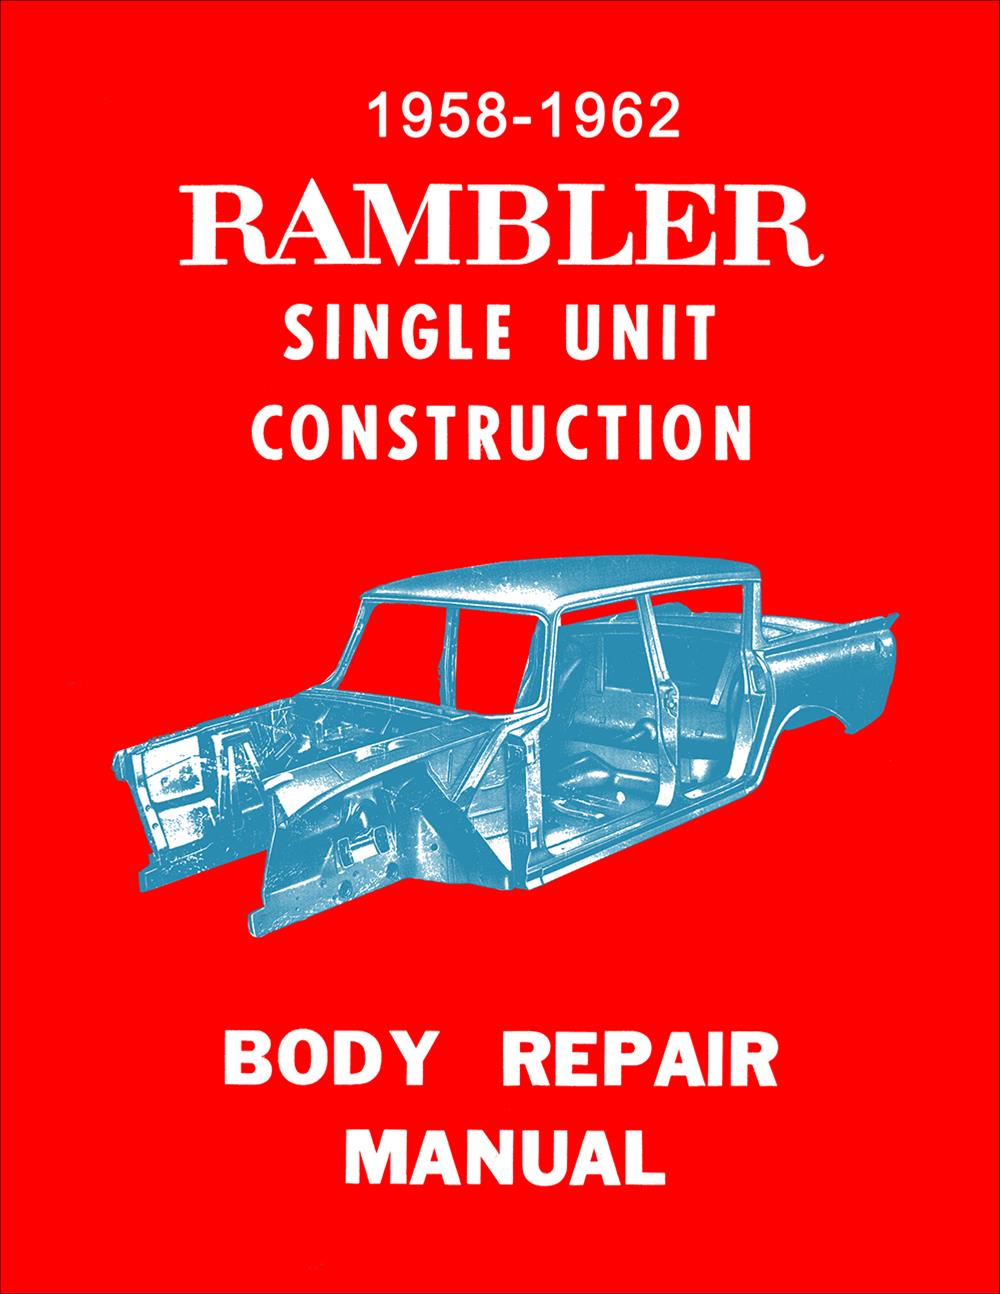 1958-1962 AMC Rambler Body Manual Reprint--All Models